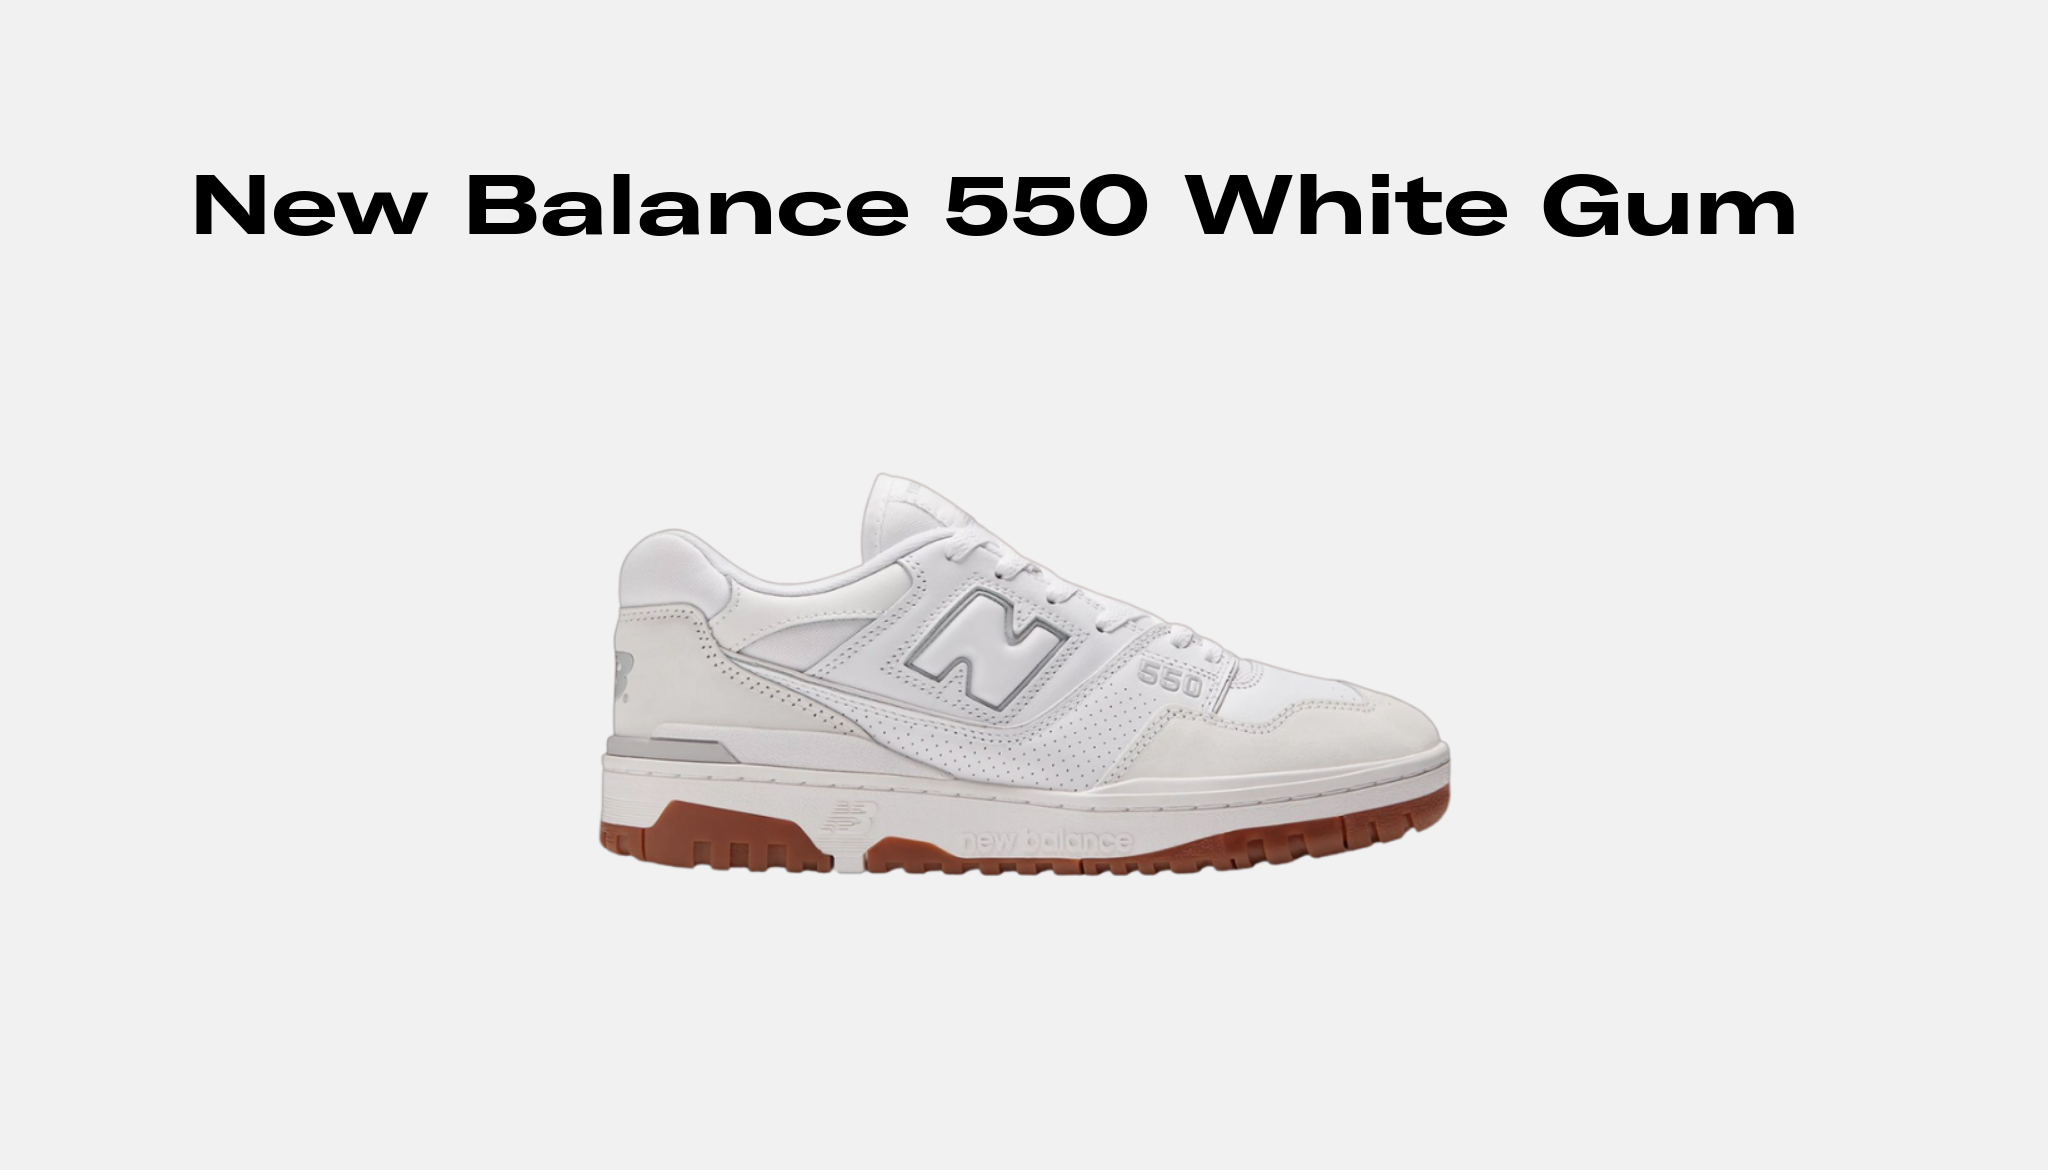 New Balance 550 White Gum, Raffles and Release Date | Sole Retriever